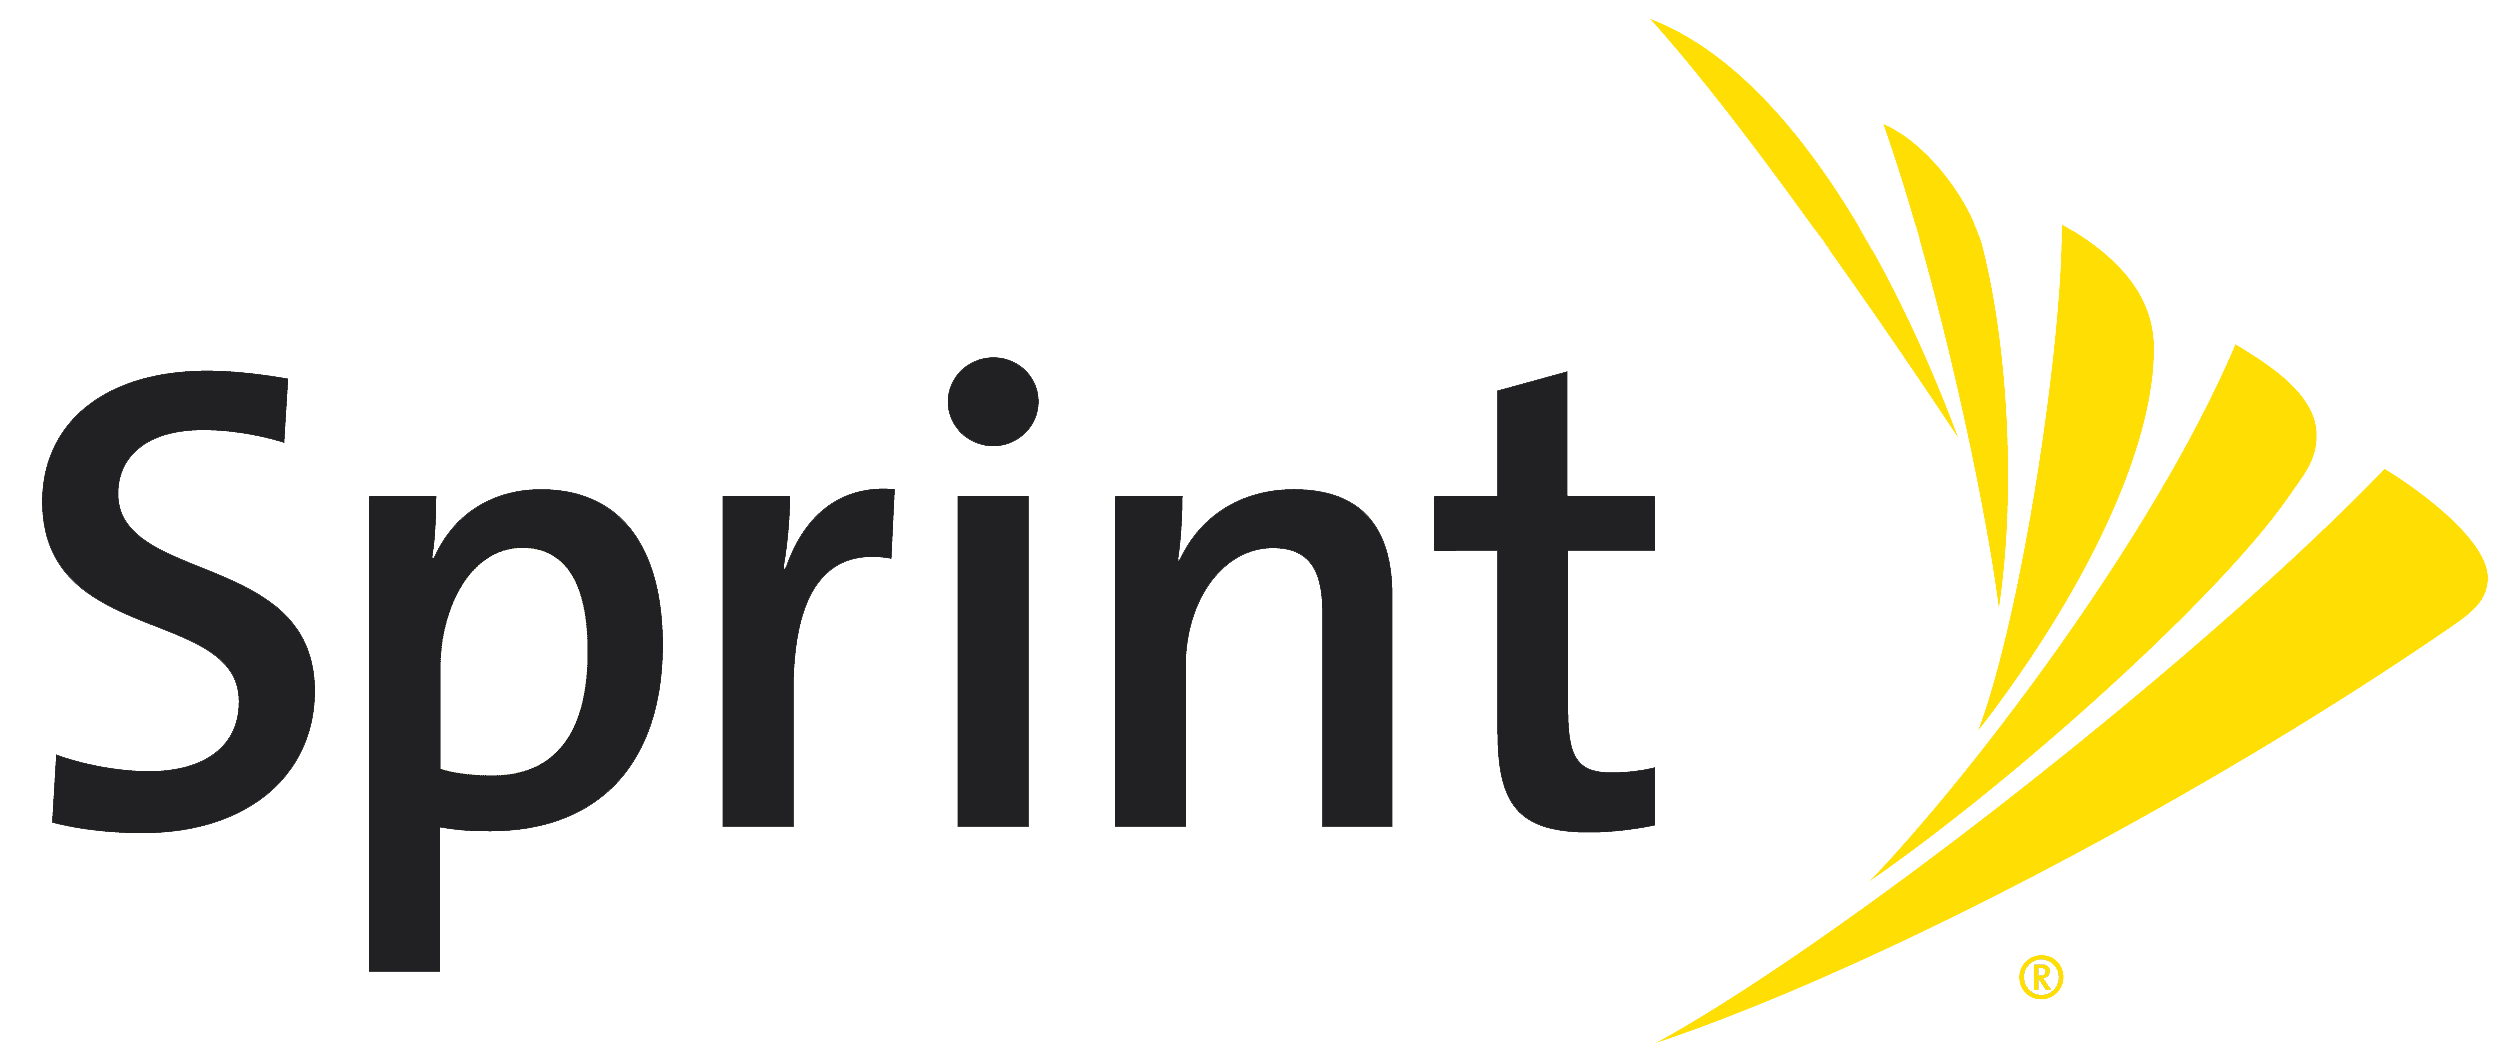 Logo - Carrier - Sprint